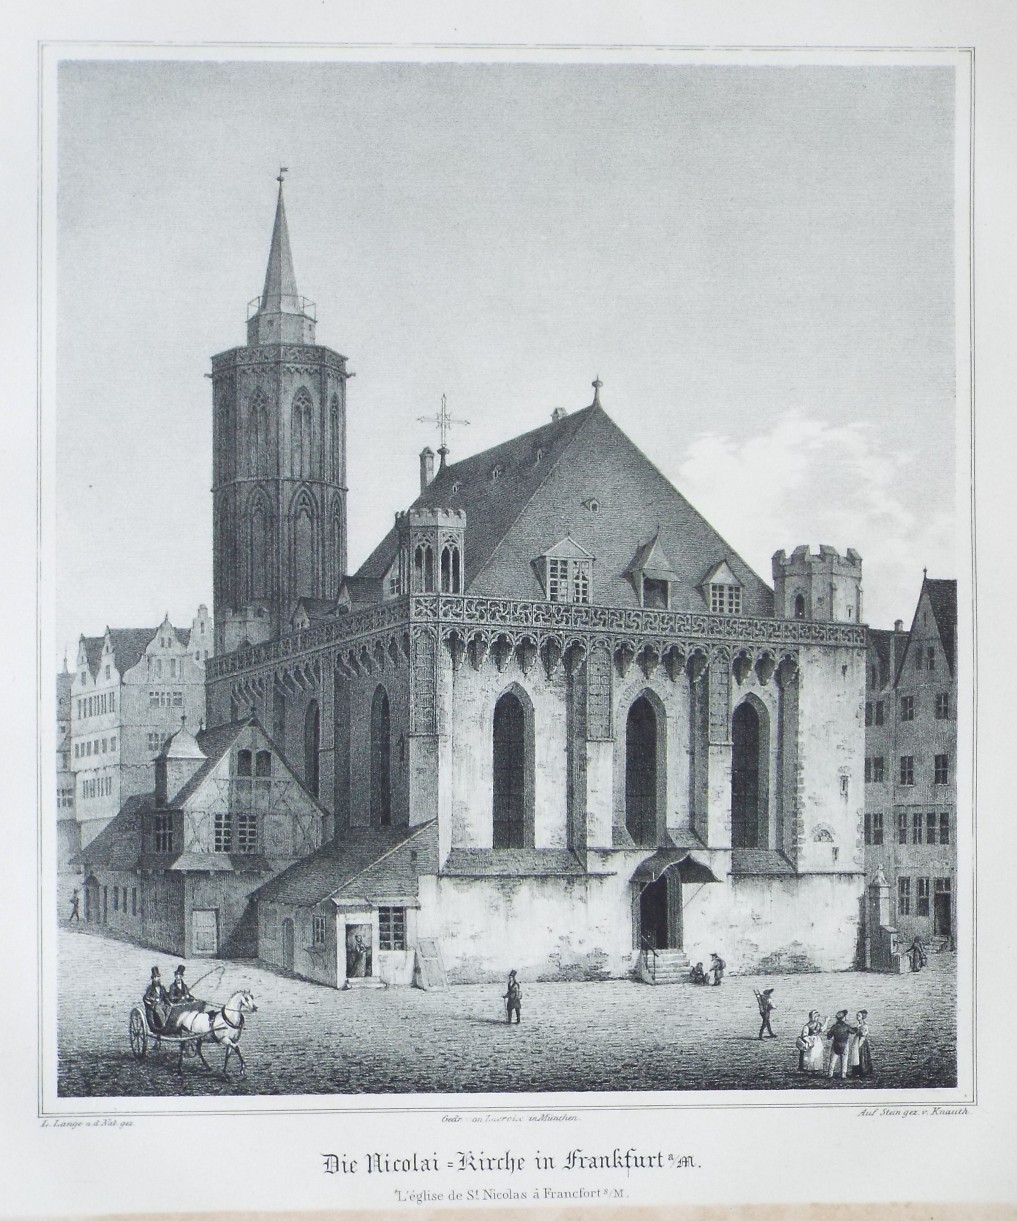 Lithograph - Die Nicolae - Kirche in Frankfurt a/m.
L'Eglise de St. Nicolas a Francfort s/m. - 